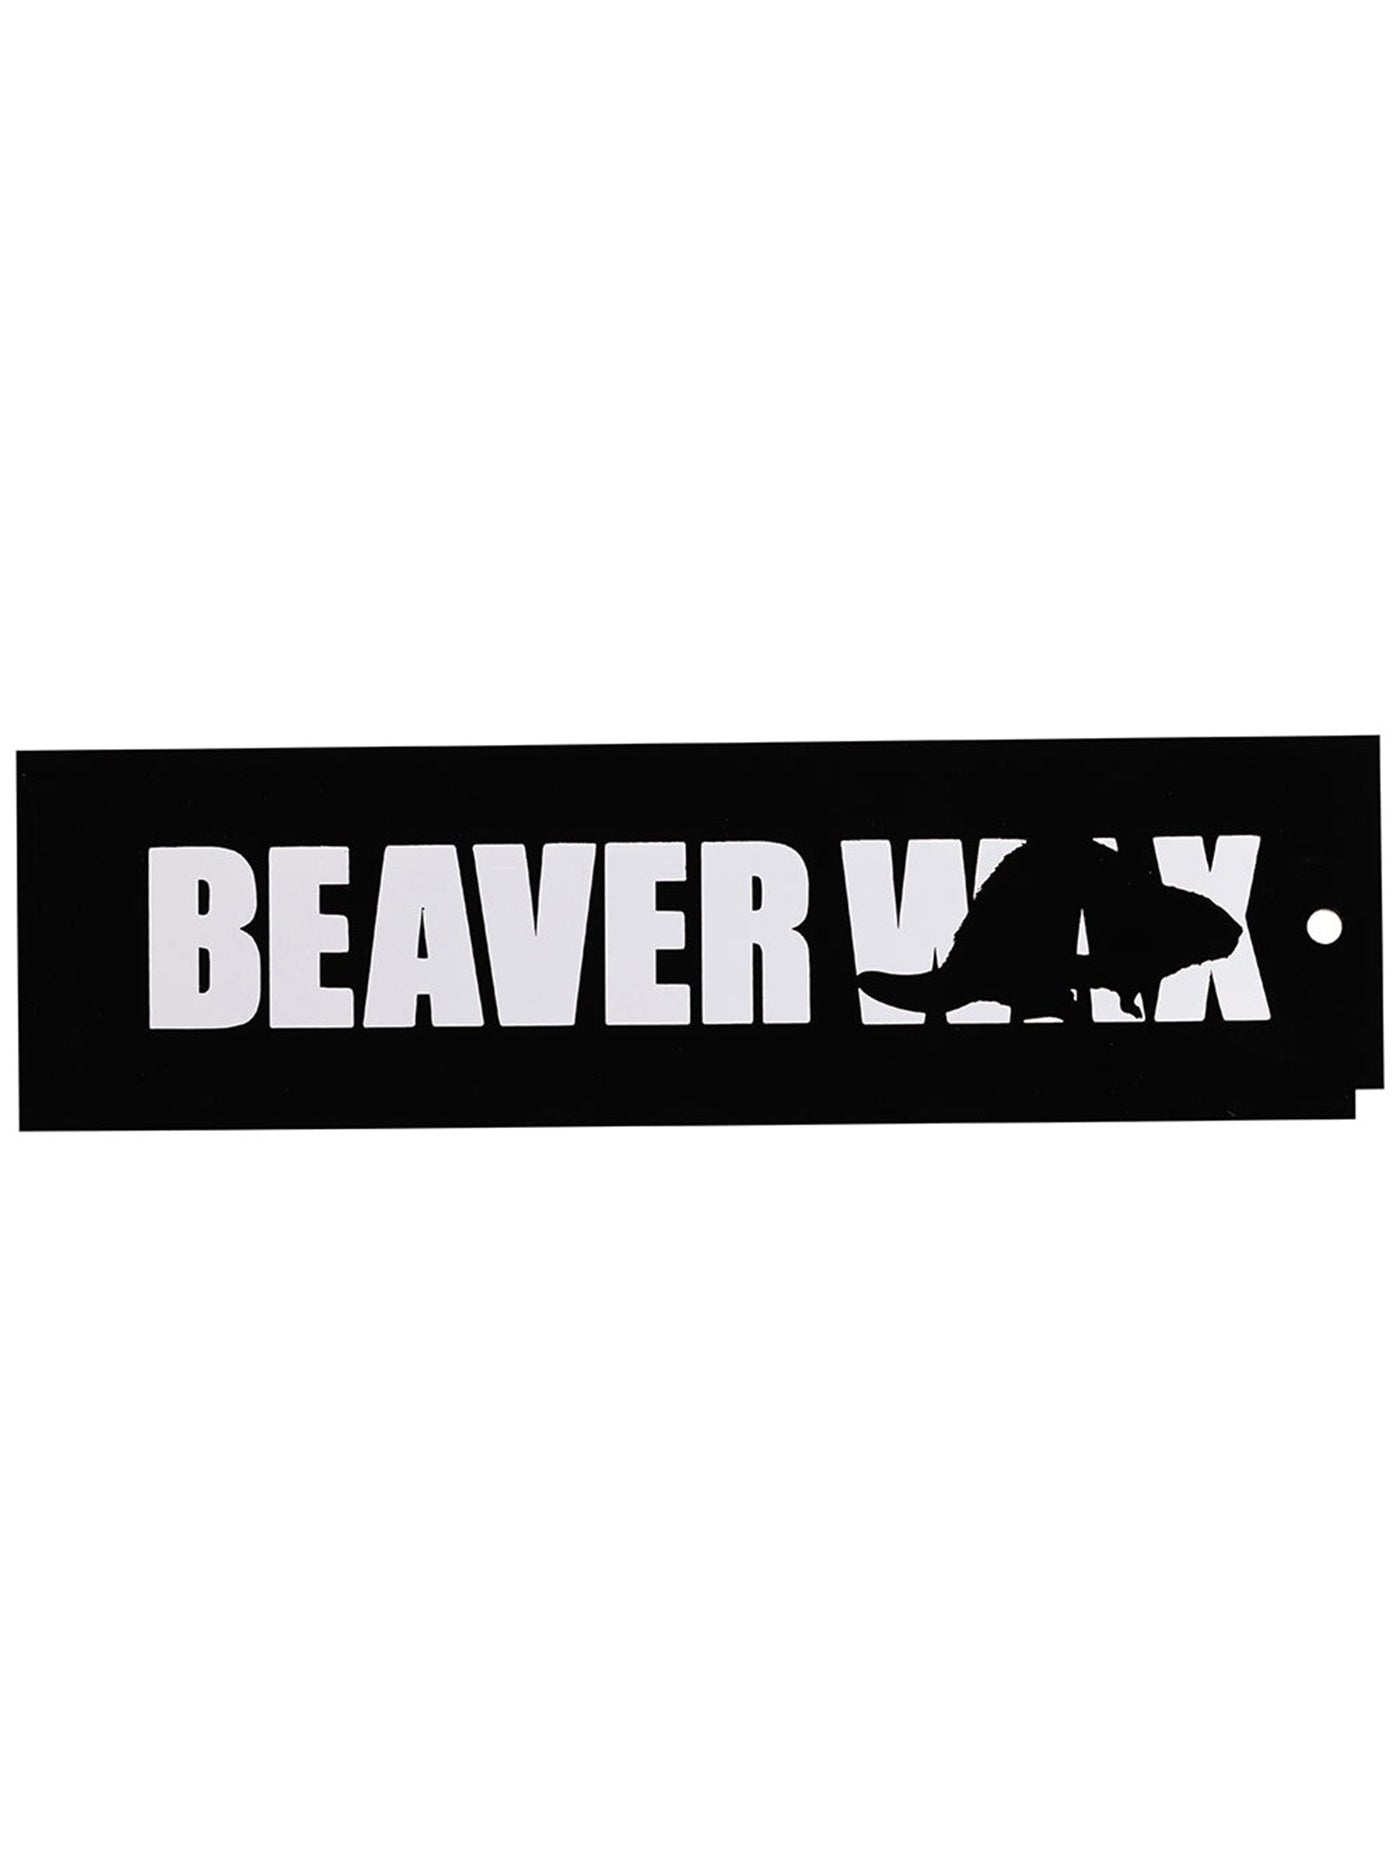 Beaver Wax The Scraper